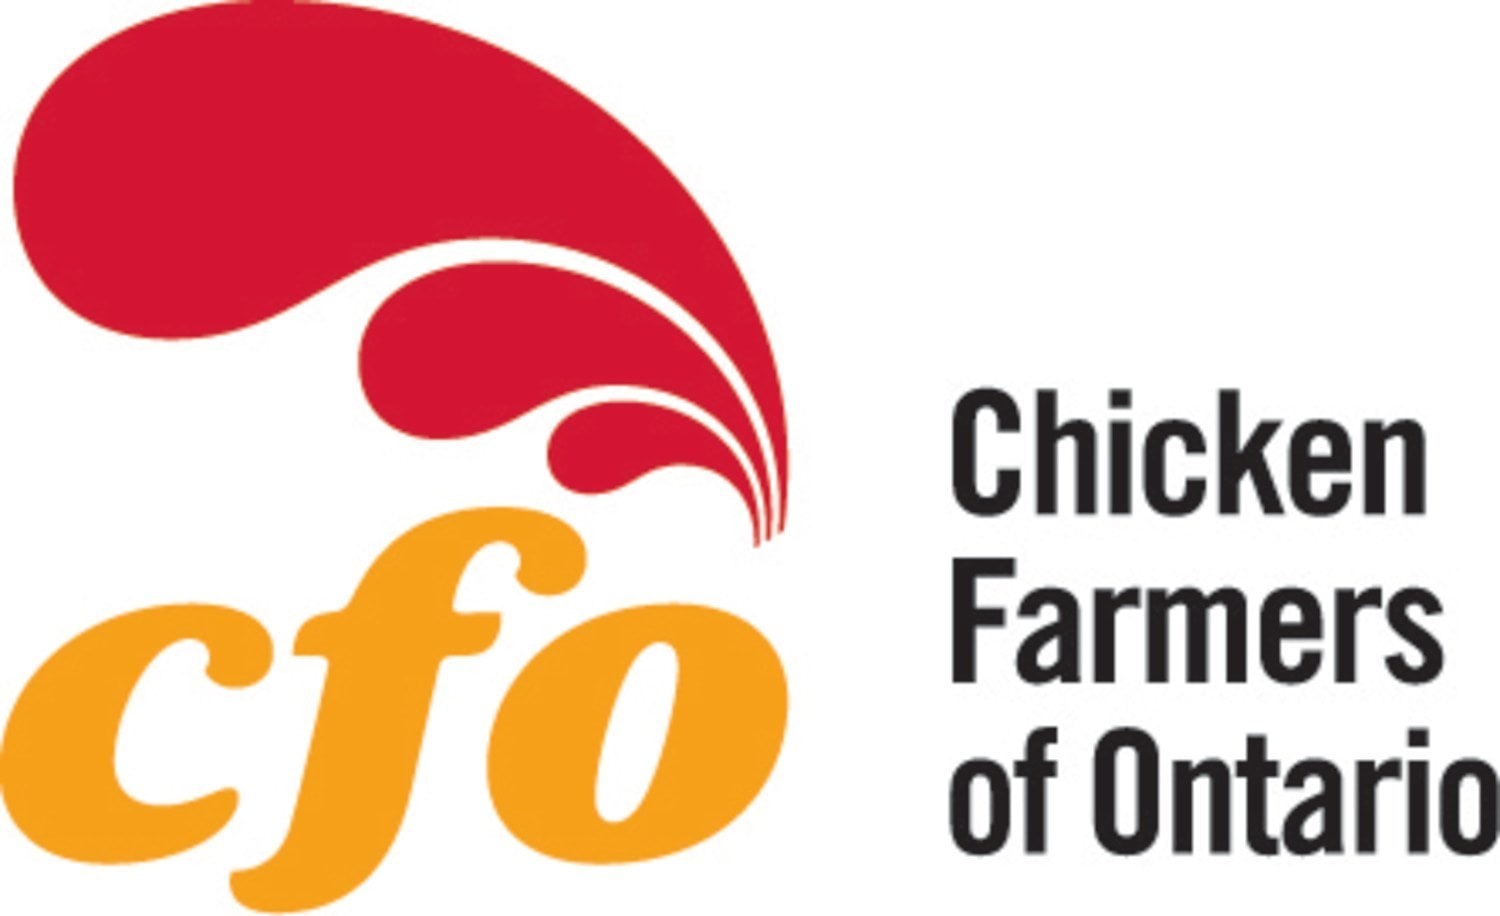 Chicken Farmers of Ontario logo